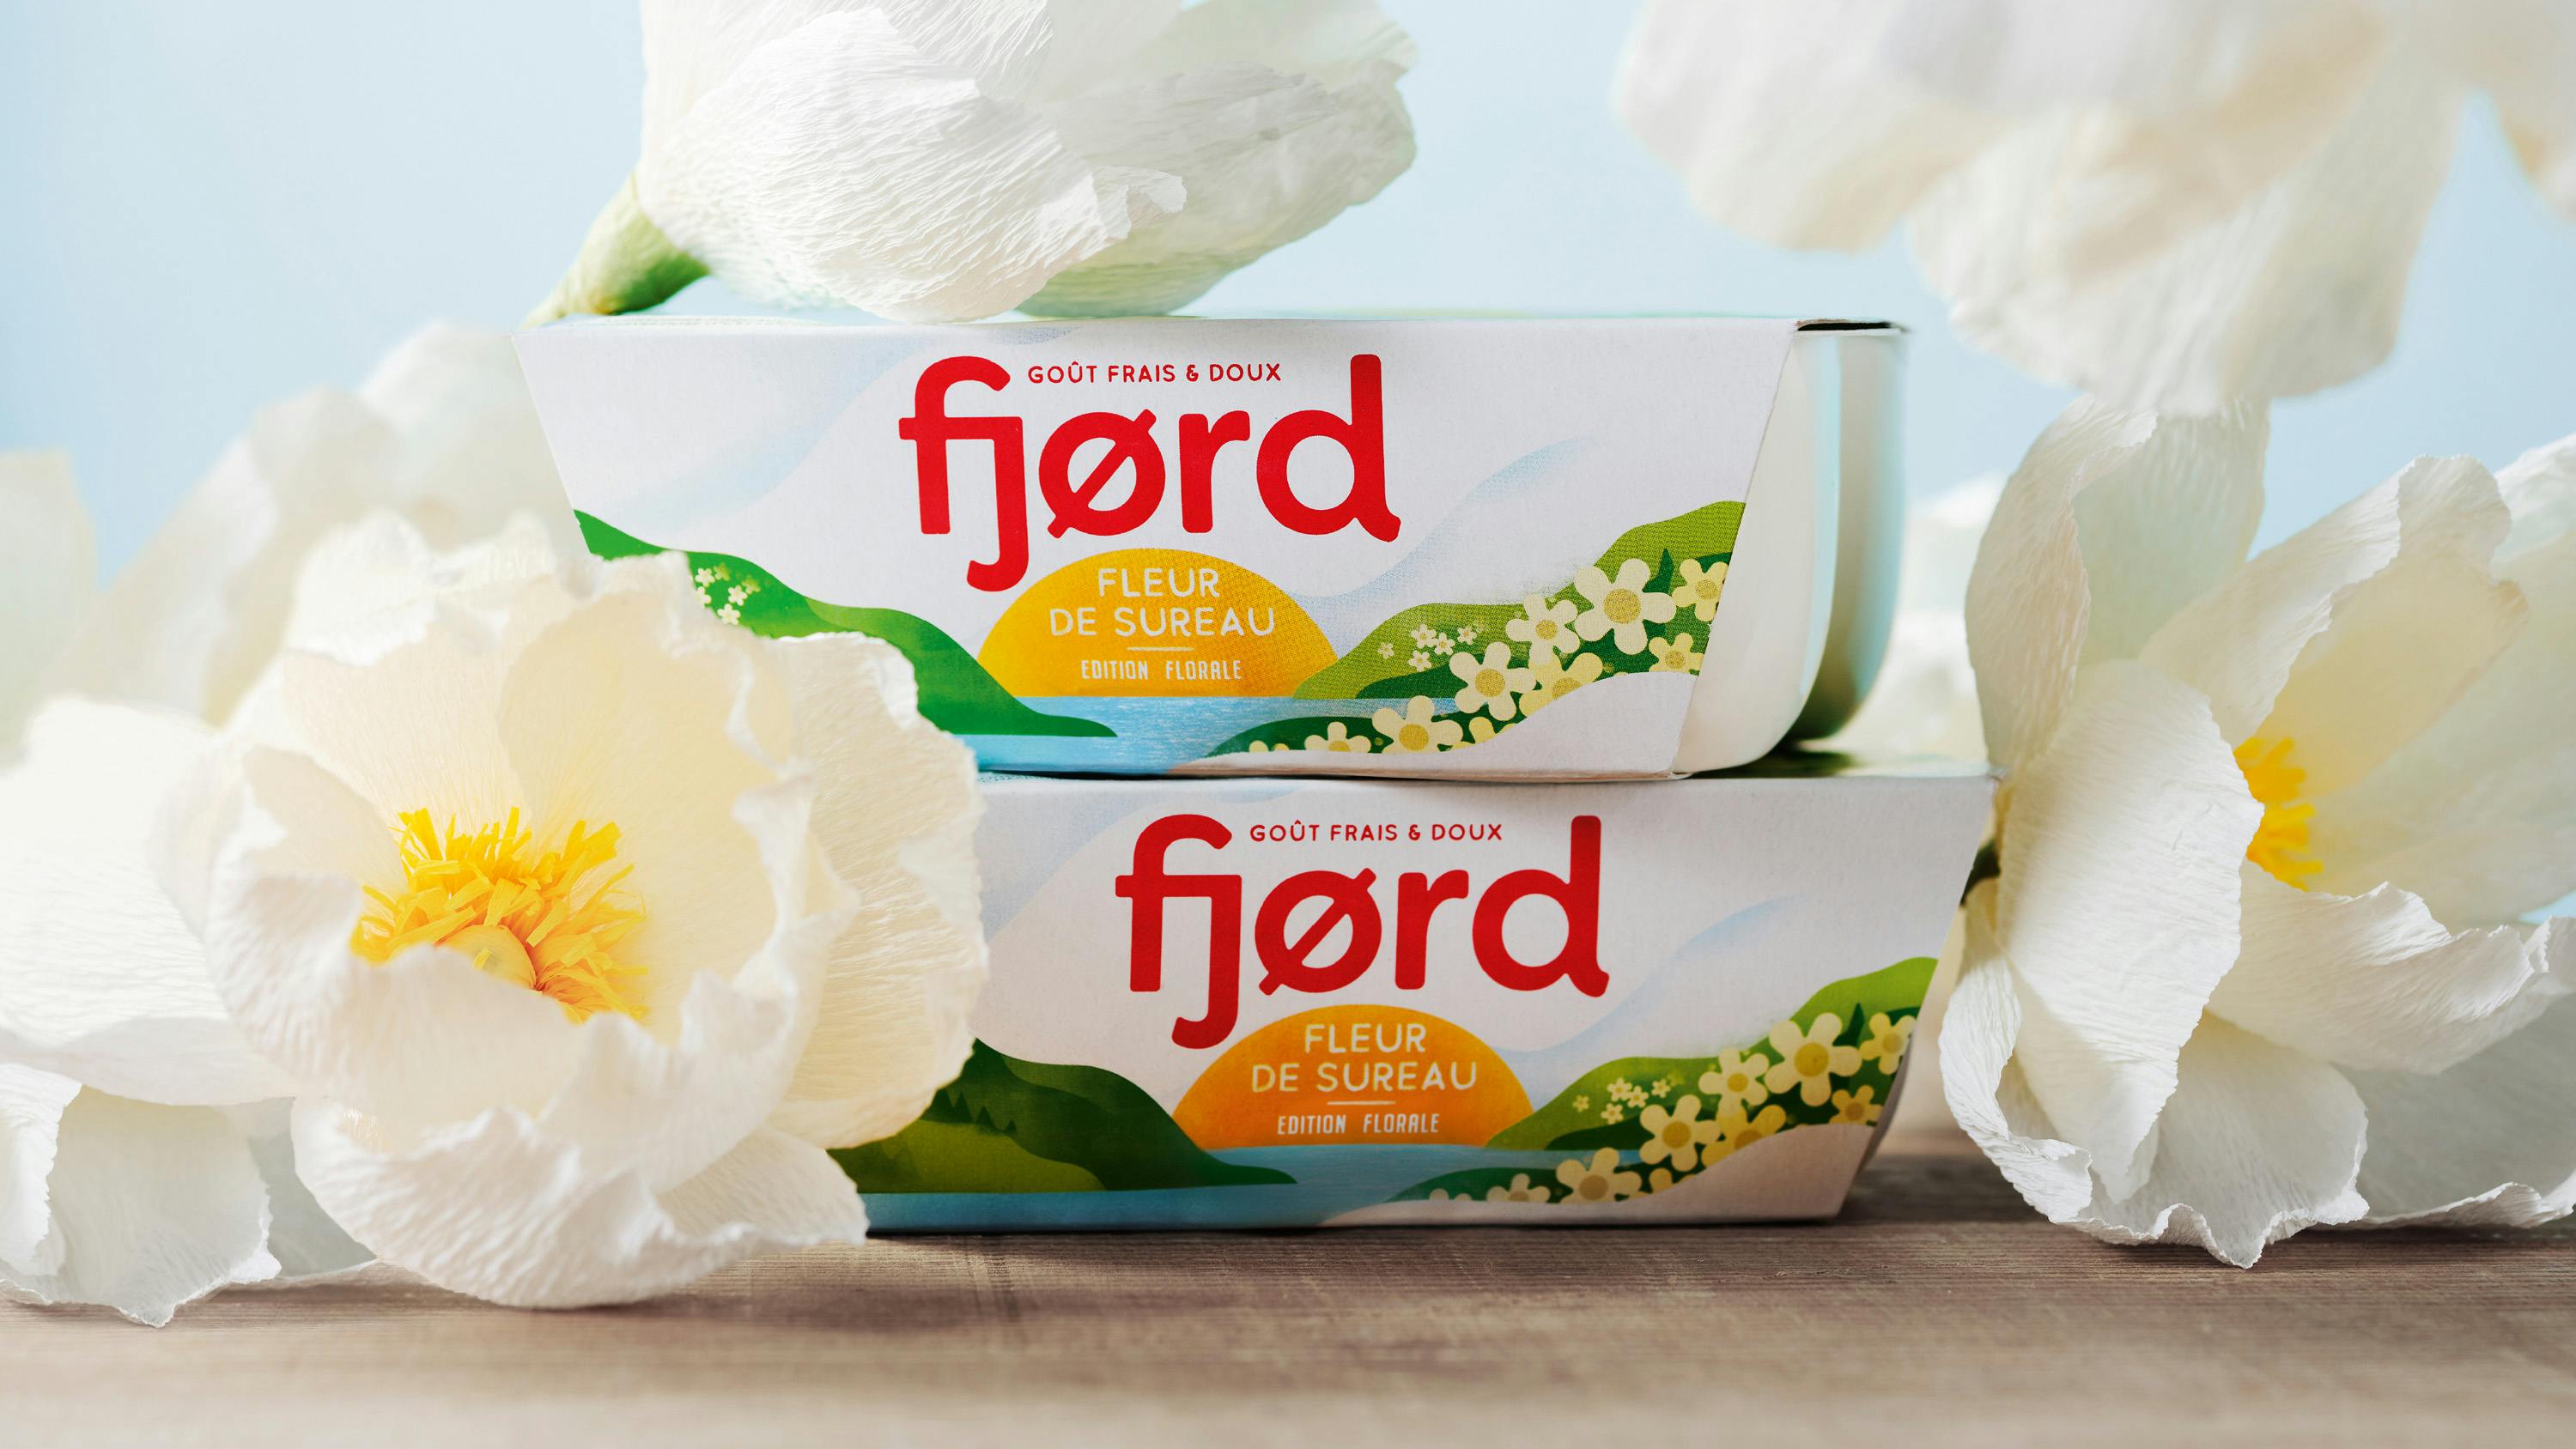 Danone Fjord yogurt packaging